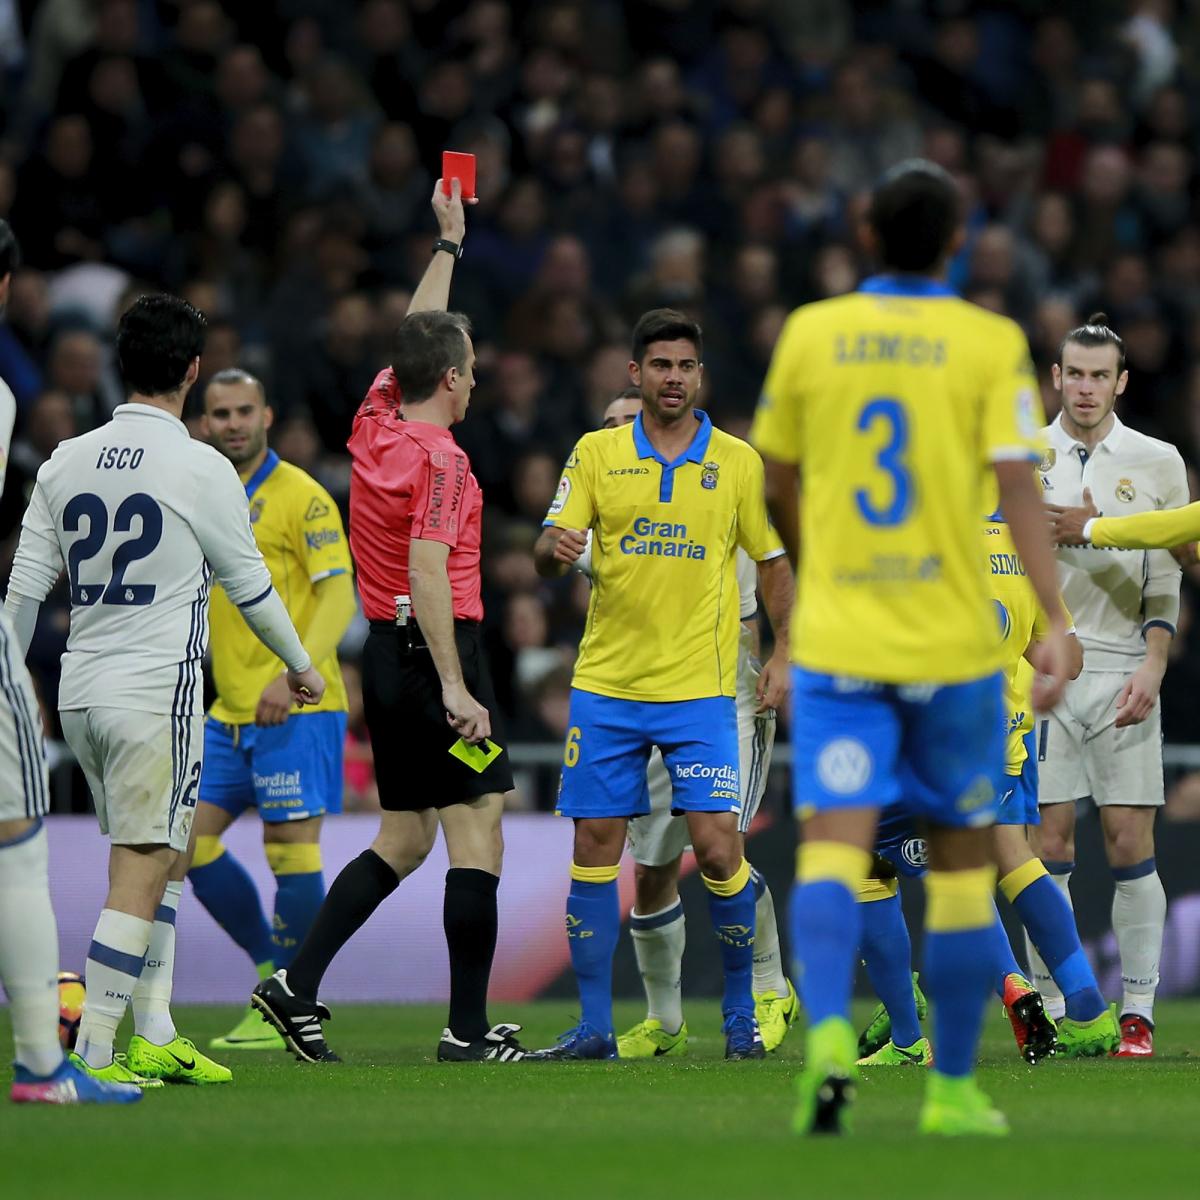 Gareth Bale Receives a Yellow Card